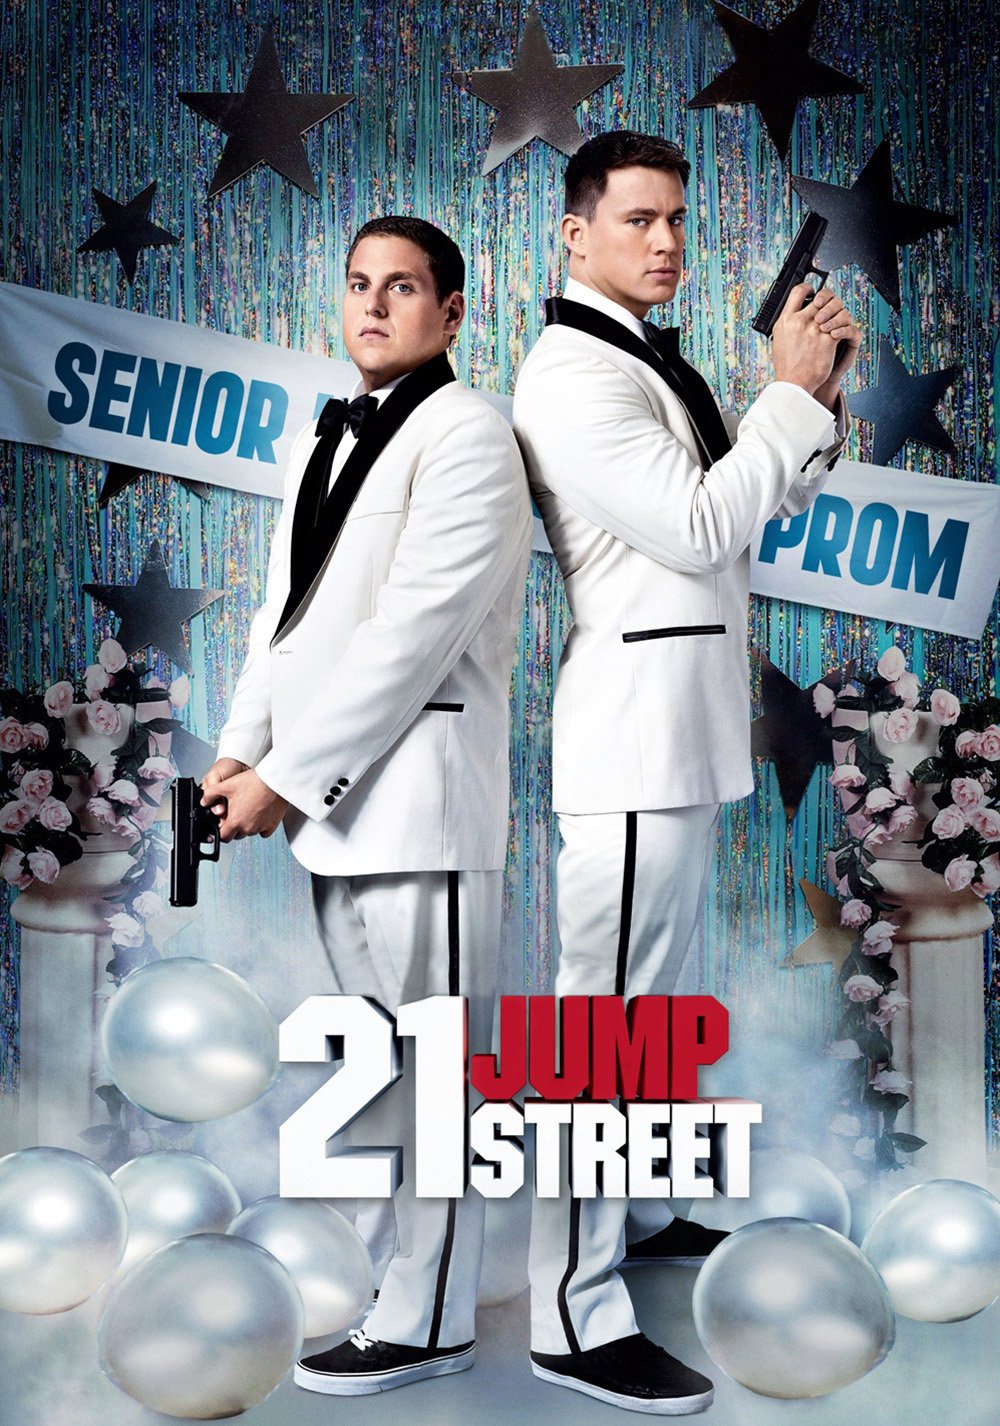 21 jump street full movie online no download